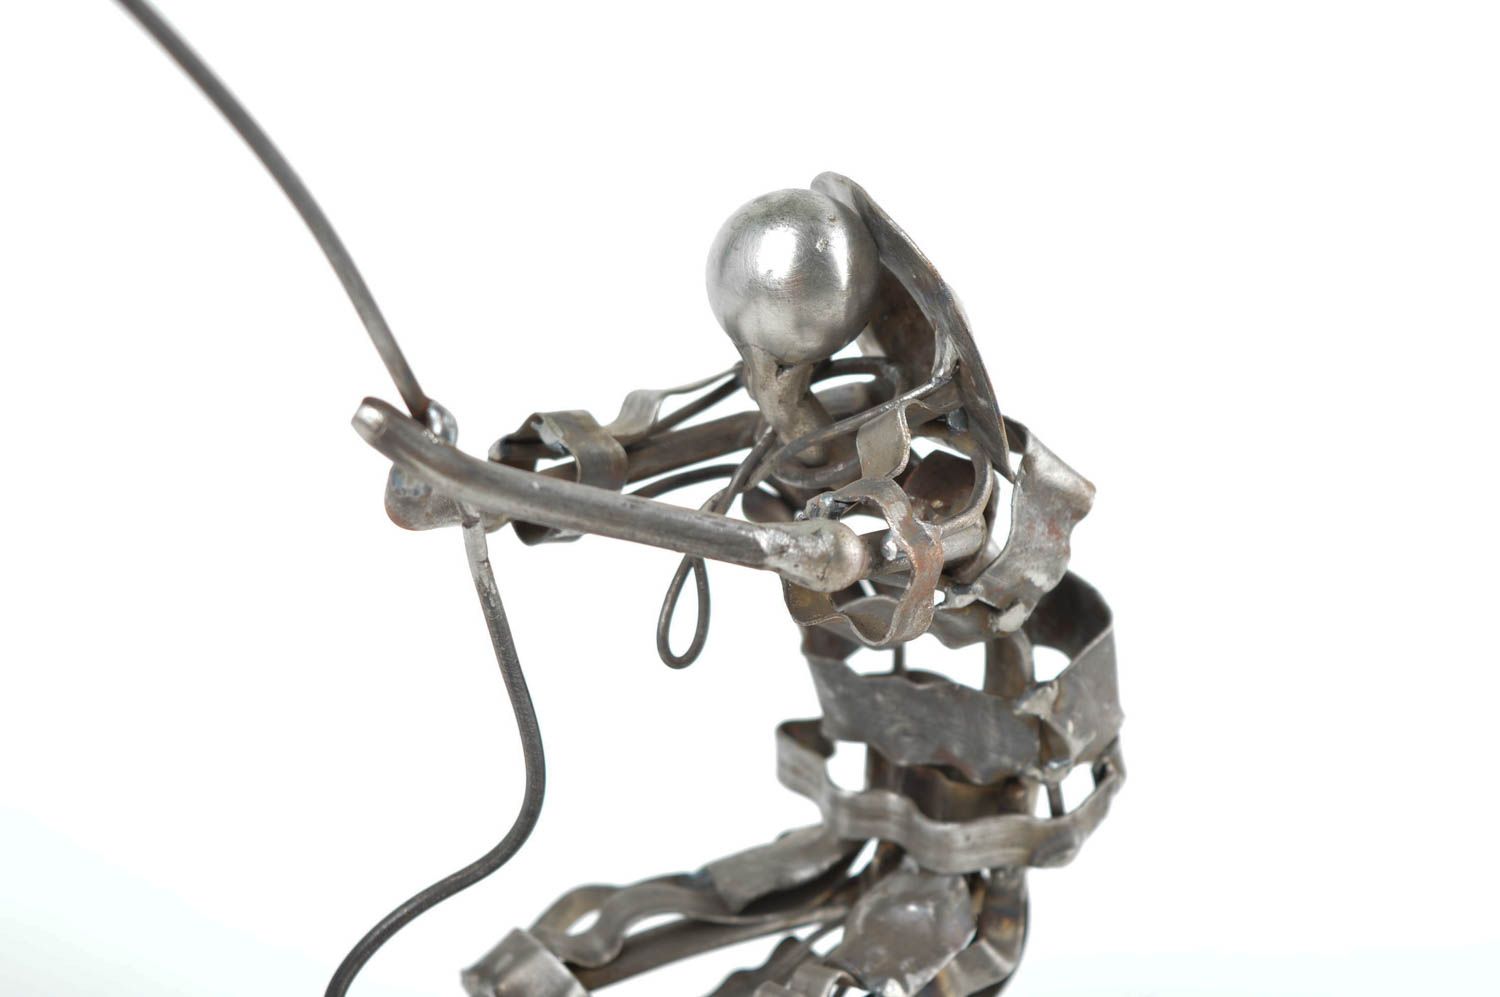 Unusual handmade metal figurine metal craft gift ideas decorative use only photo 5